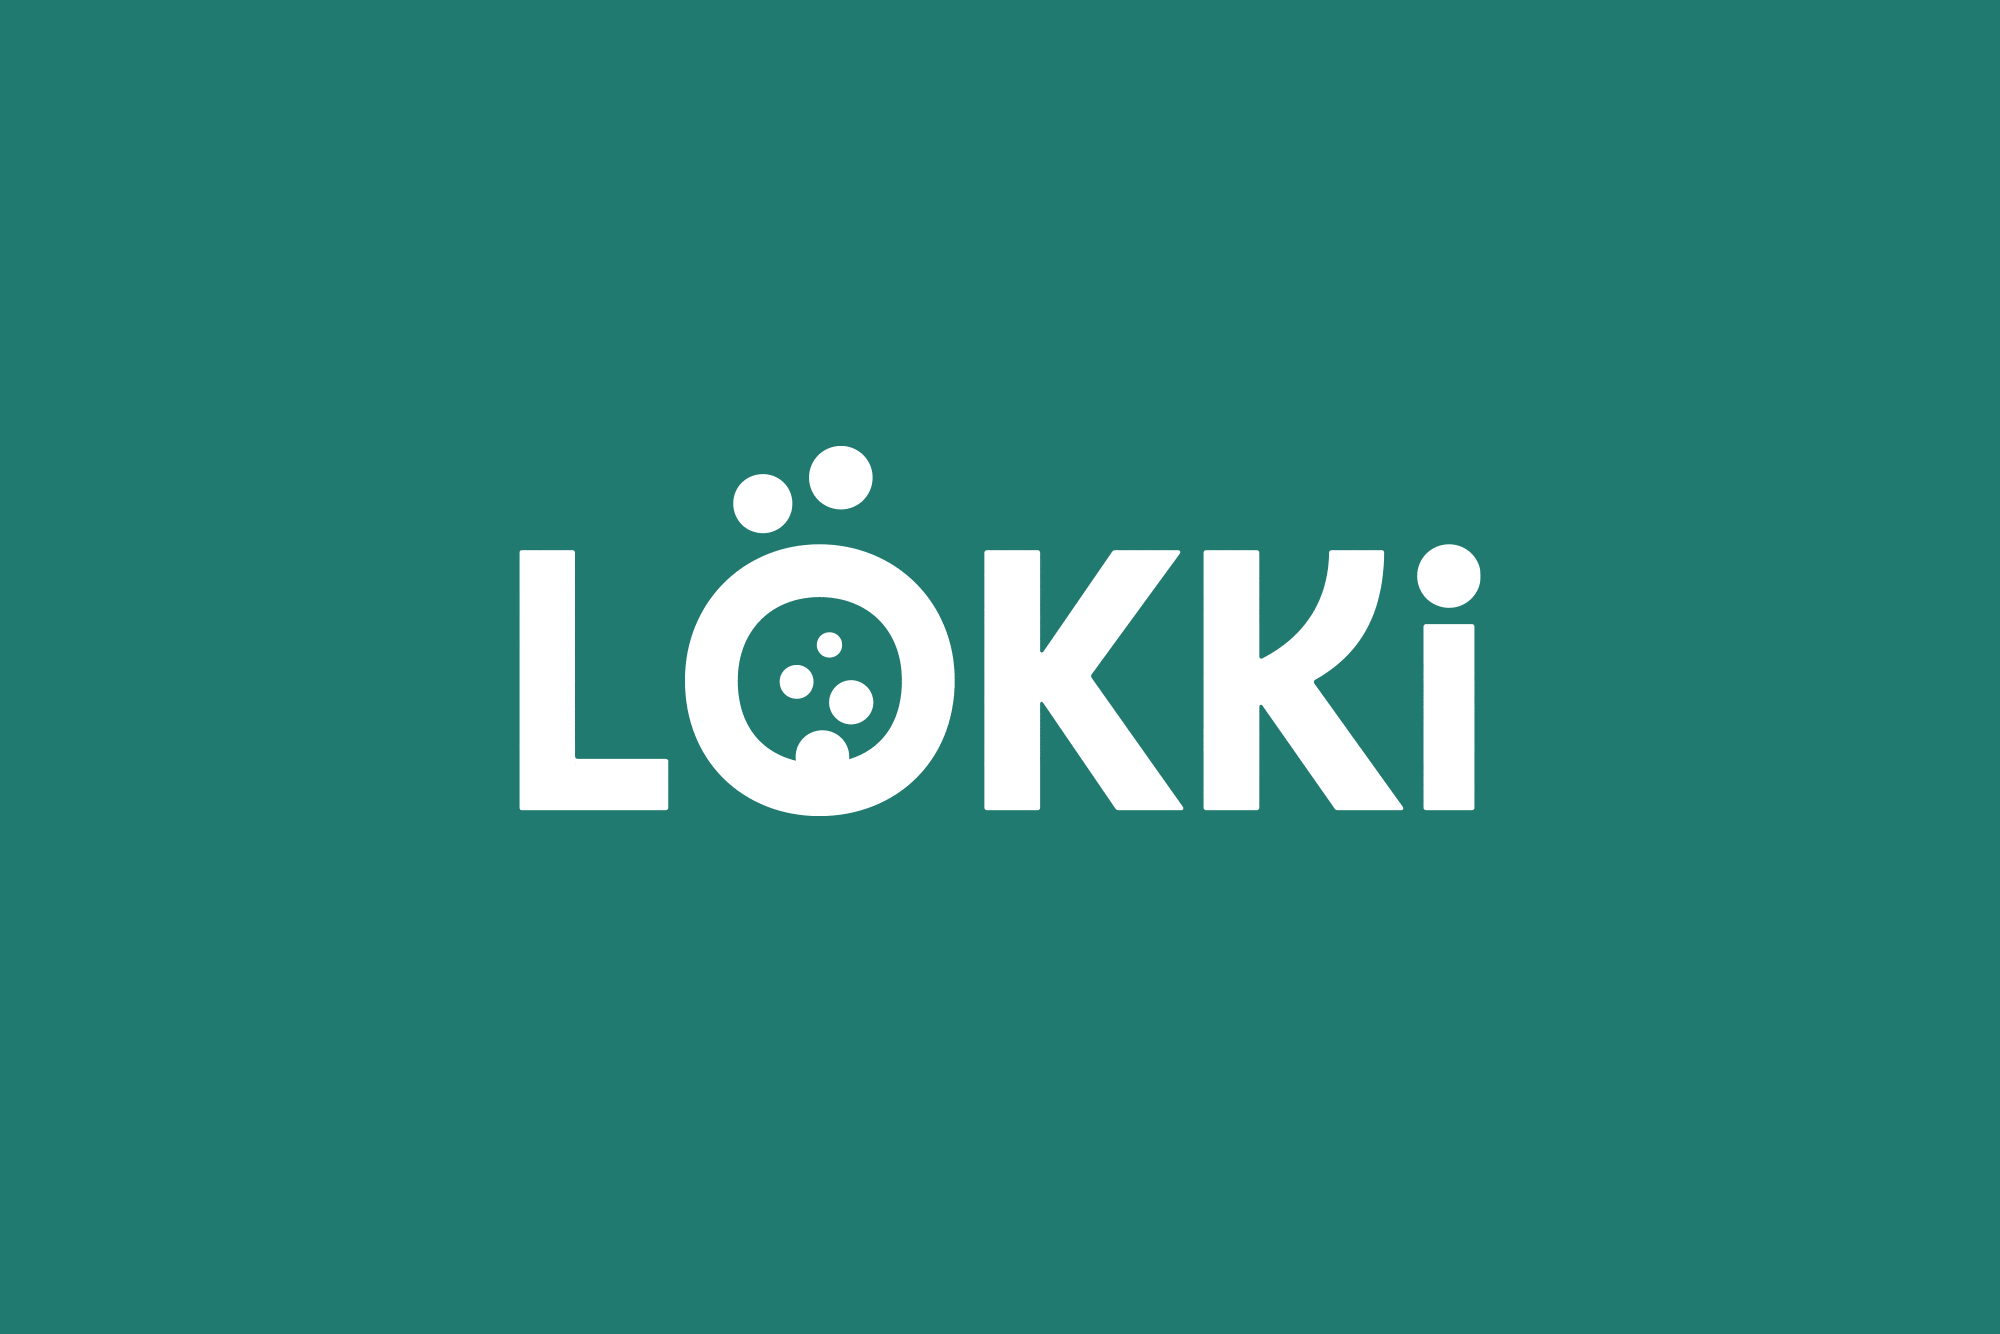 Refonte identité visuelle du logo Lökki Kombucha